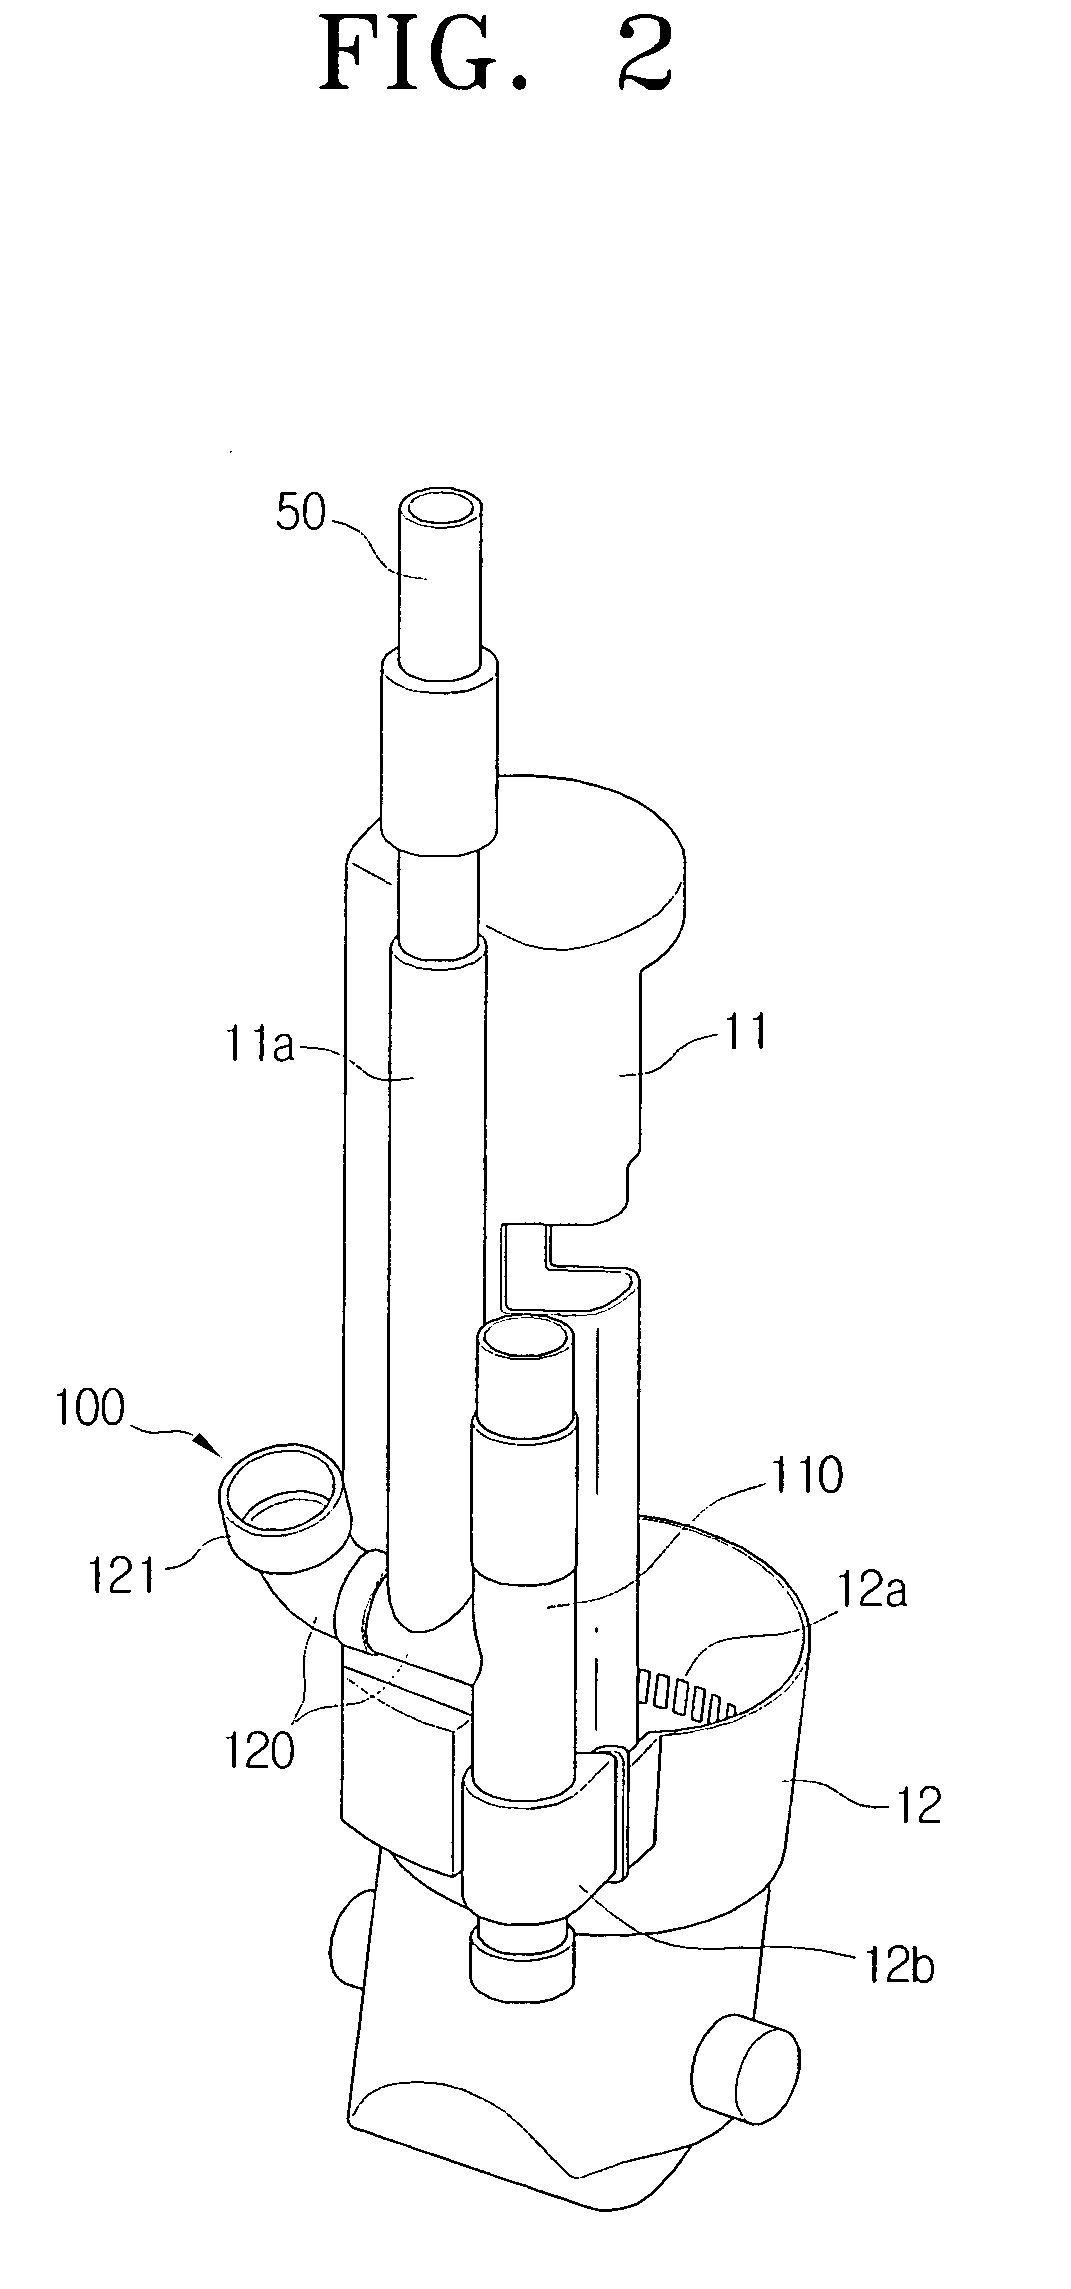 Upright vacuum cleaner having suction path diverting valve